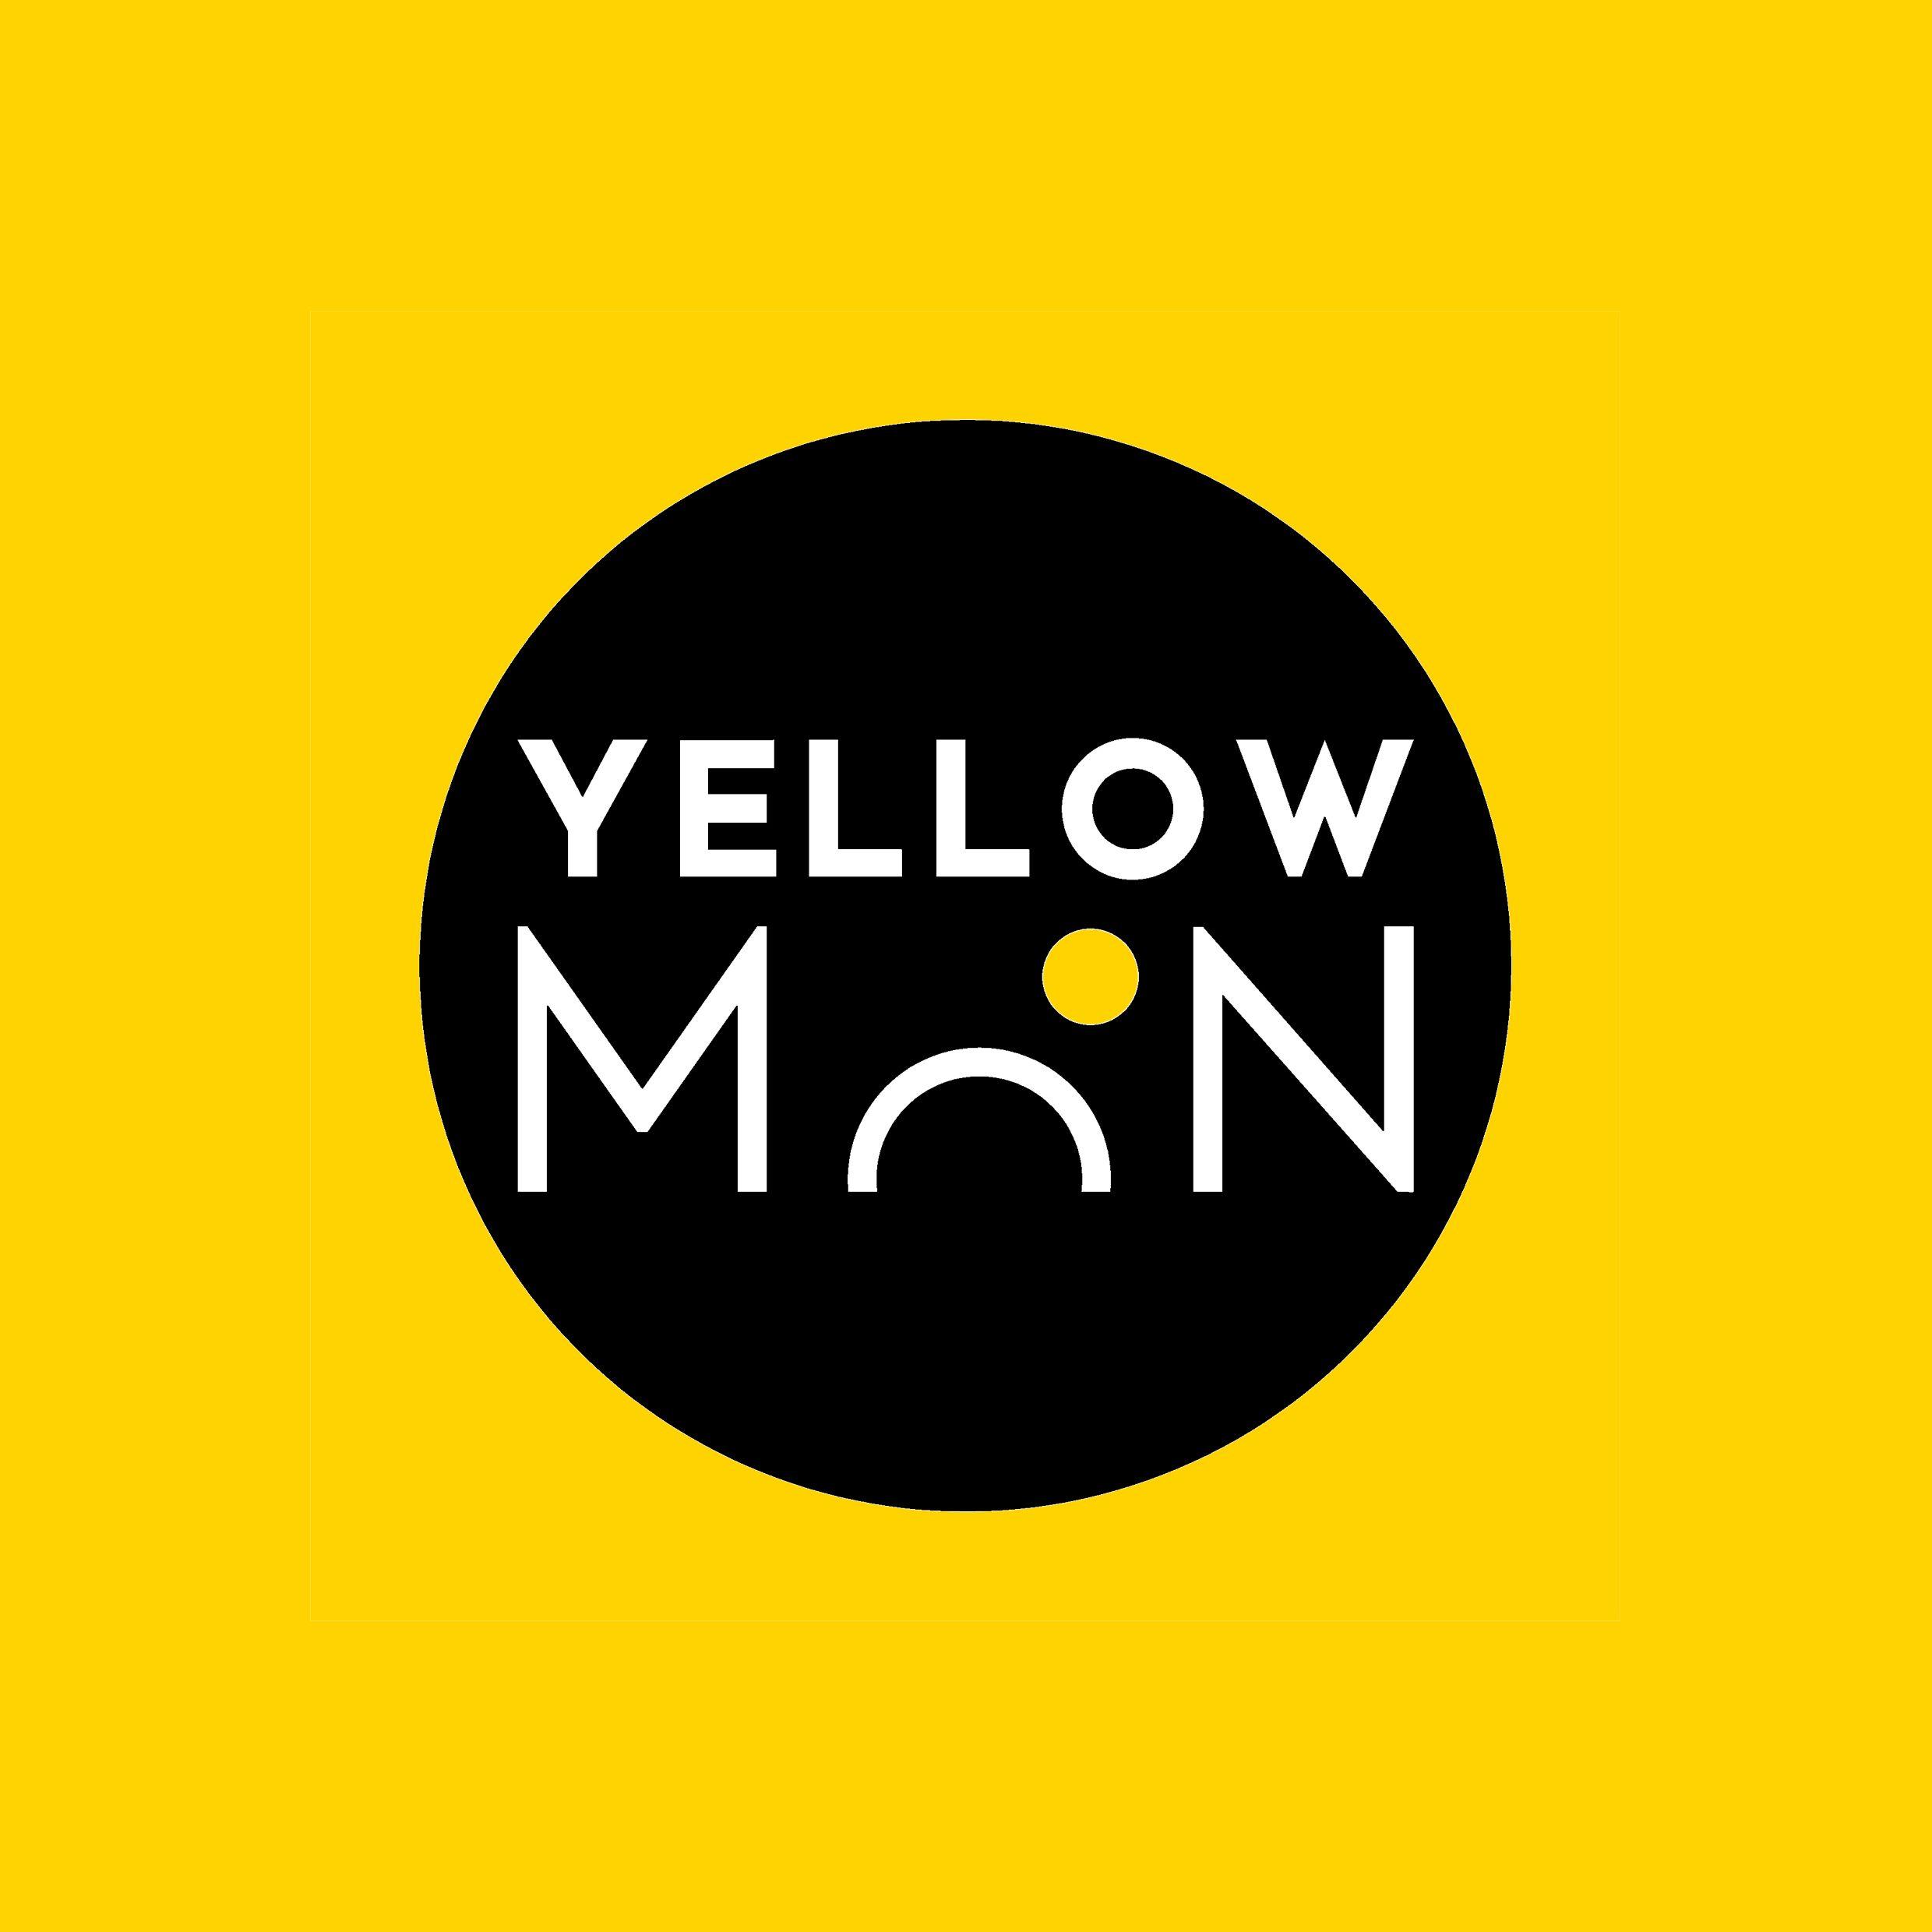 Yellow Moon Logo - YELLOW MOON